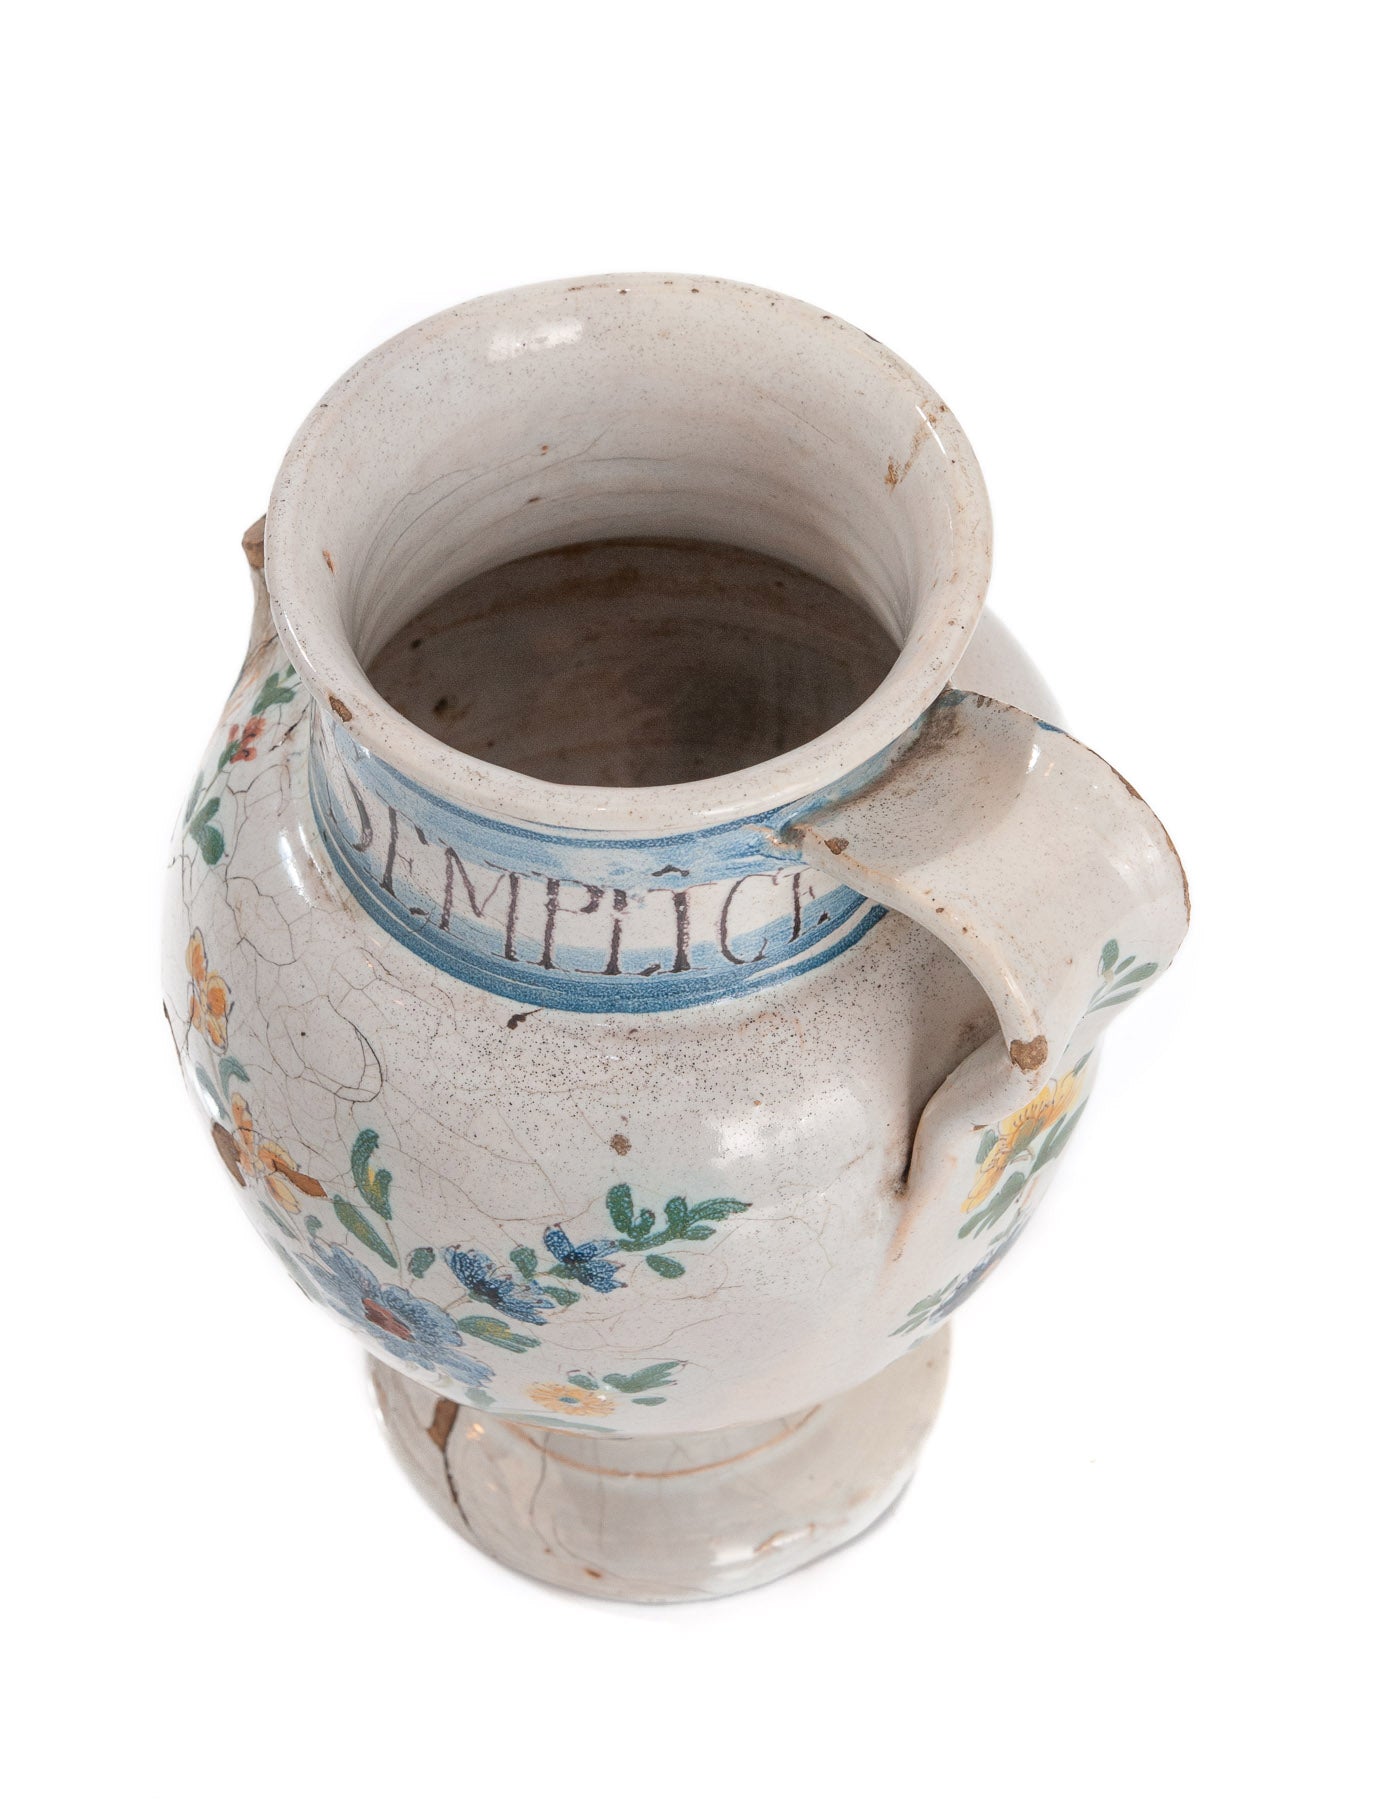 Antique Bassano Maiolica Pottery Albarello Wet Drug Jar with Apothecary's Name (Code 1947)